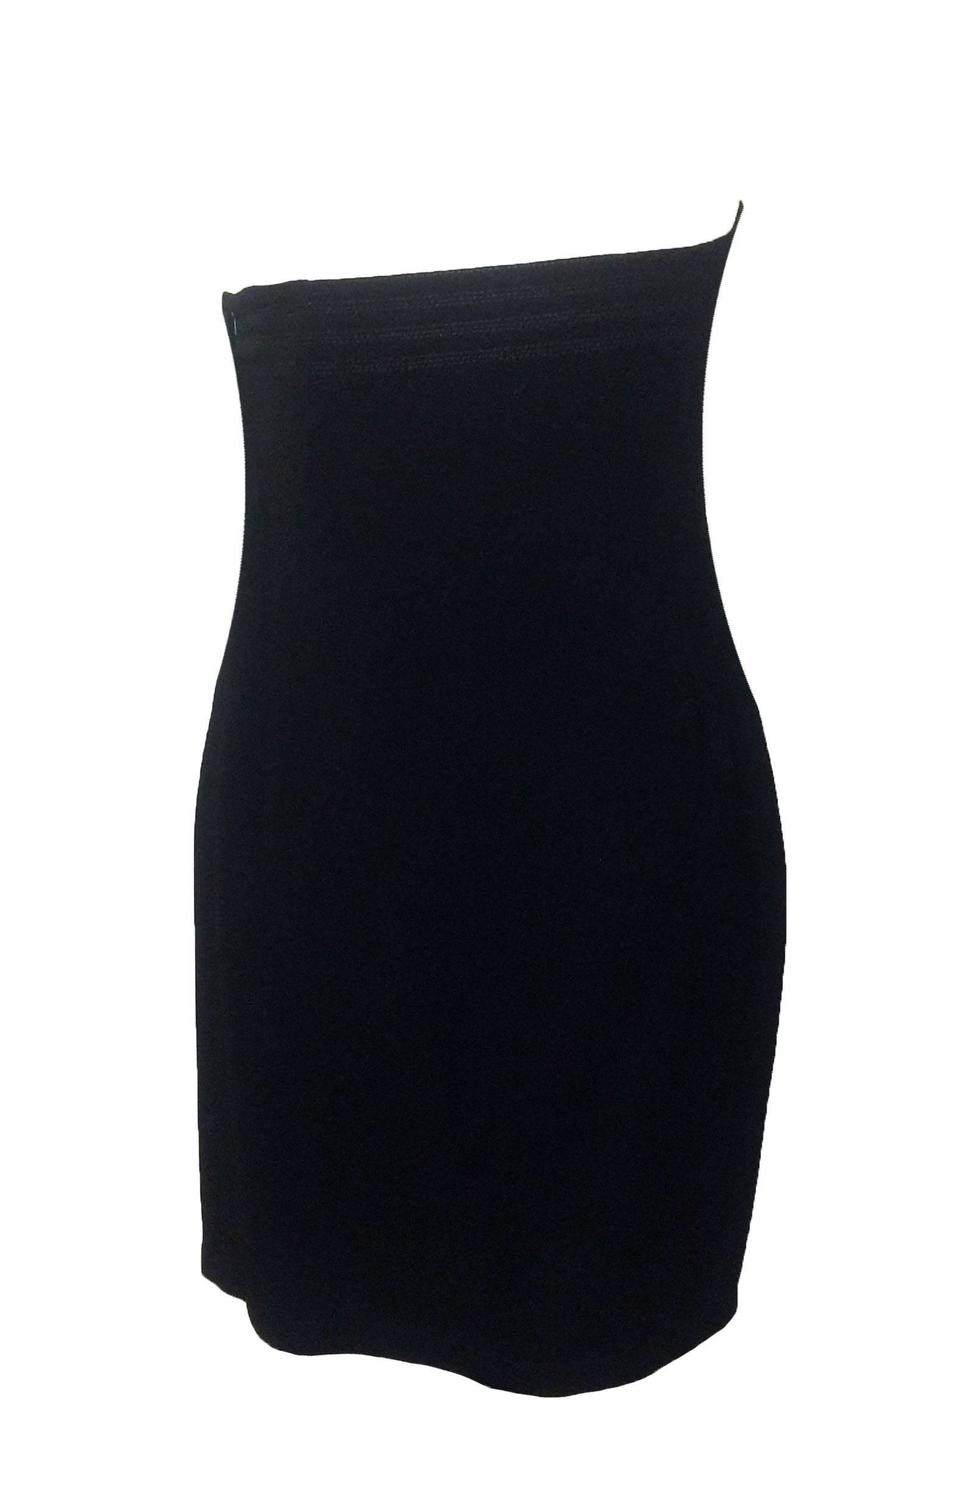 Gianni Versace 90s Asymmetrical Single Breasted Little Black Dress For